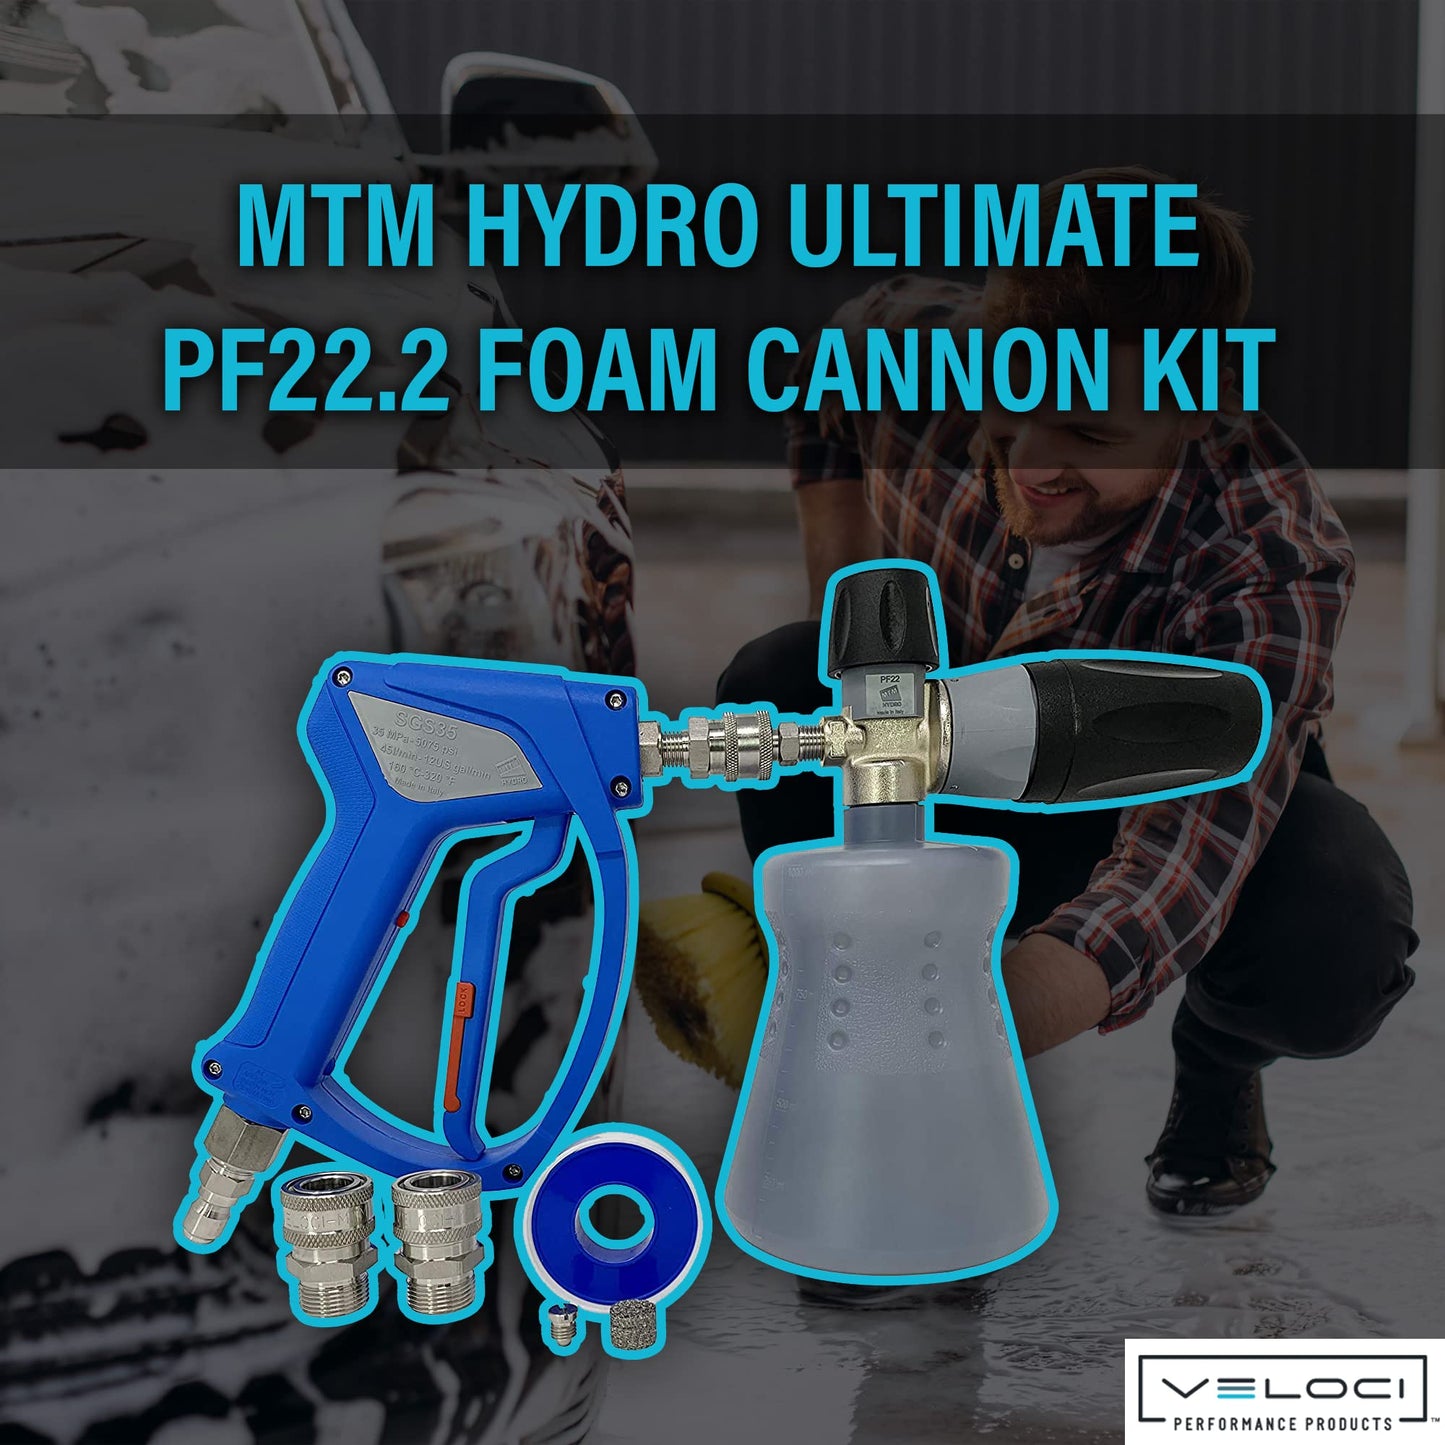 MTM Hydro Ultimate PF22.2 Foam Cannon Kit, Pressure Washer Car Wash Sprayer Gun, High Pressure Foam Power Washer Attachment, Foam Lance for Auto Detailing, Car Washing, Adjustable Nozzle